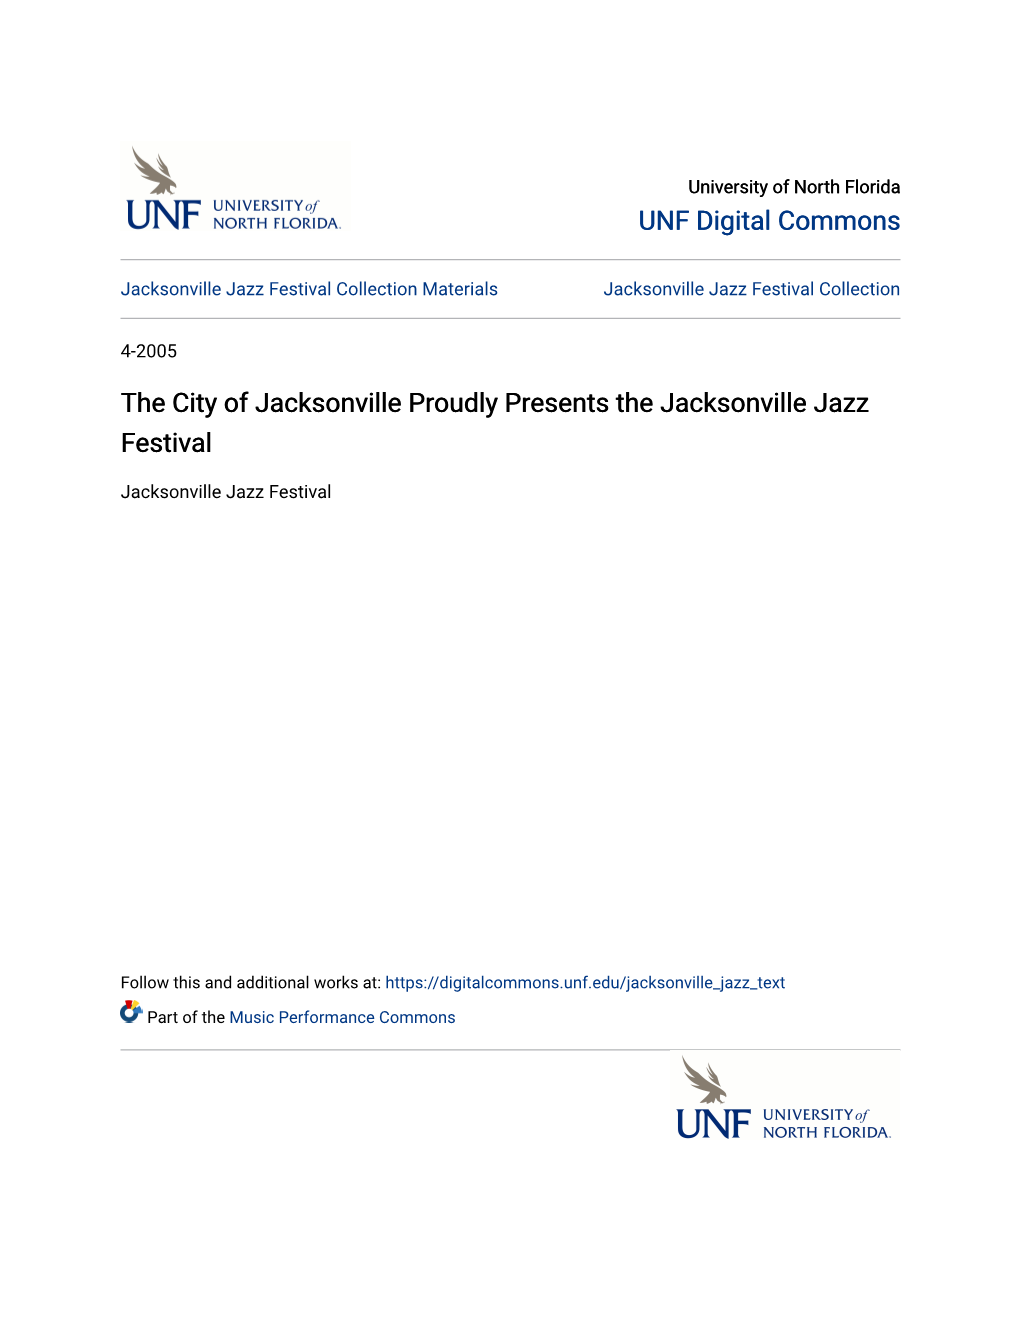 The City of Jacksonville Proudly Presents the Jacksonville Jazz Festival